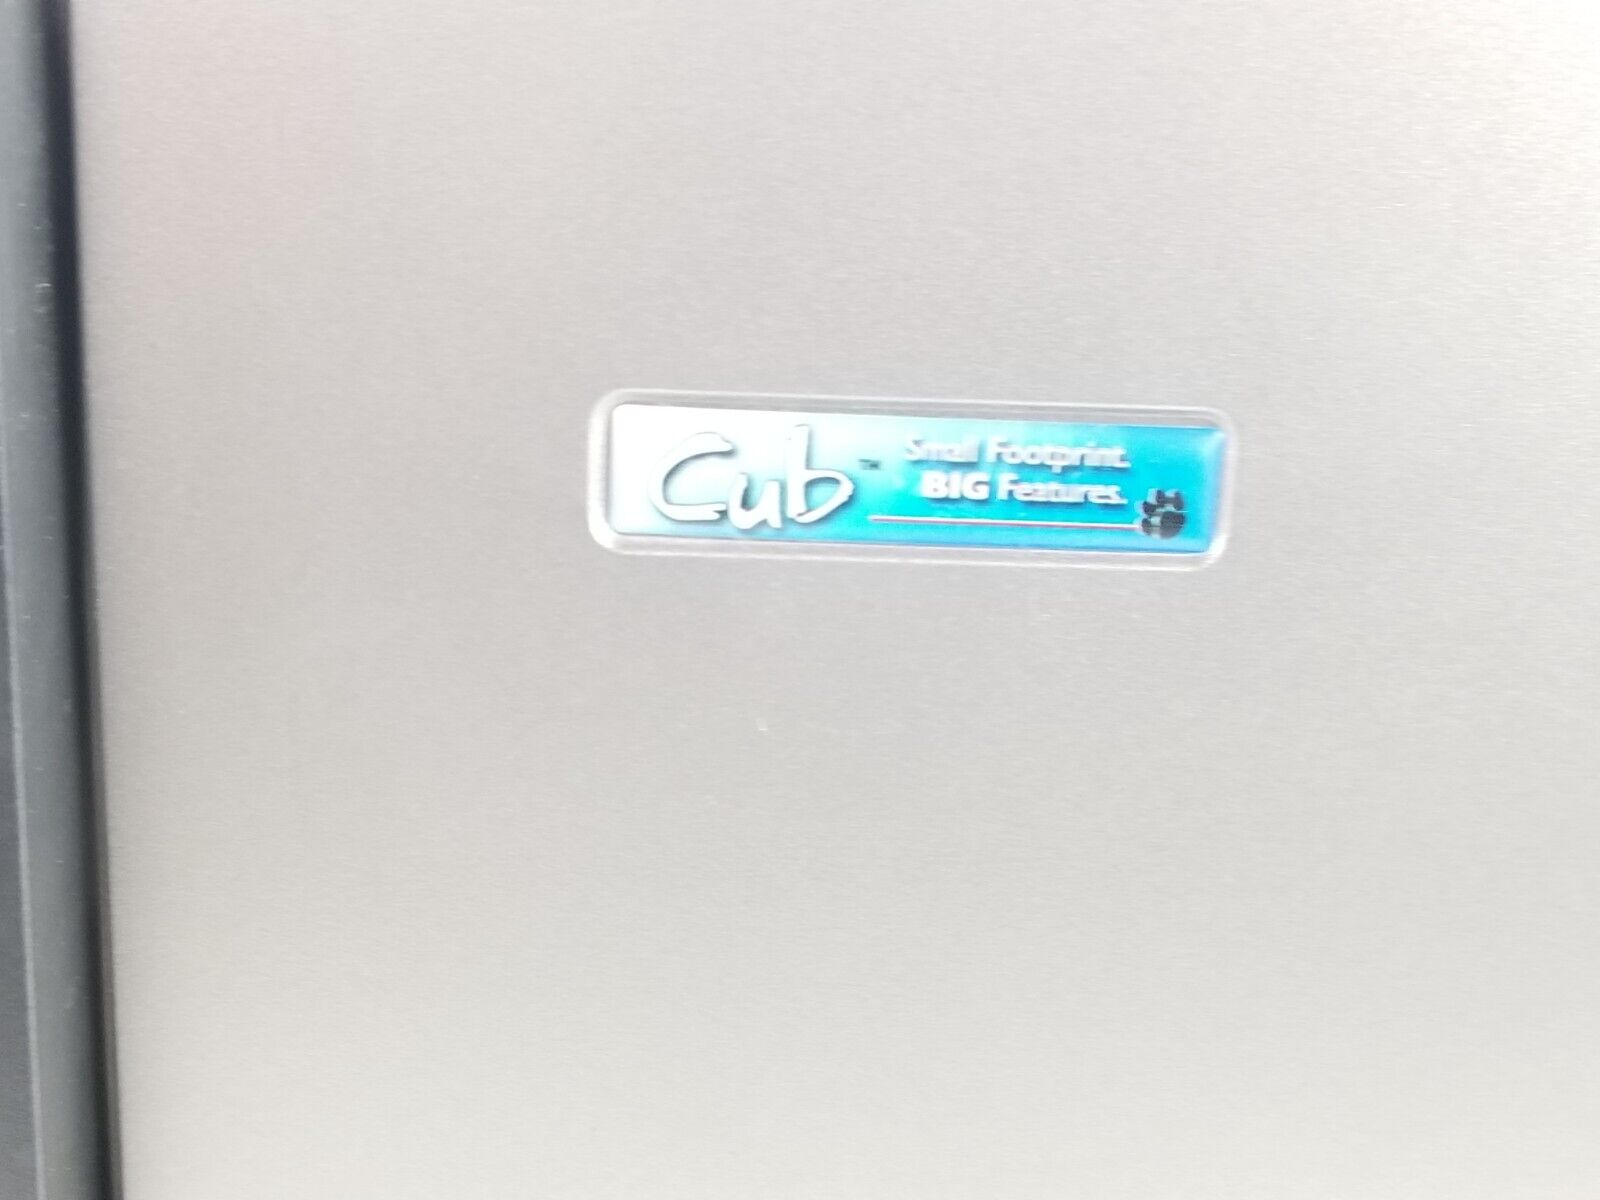 Cub CB-1024i 203dpi Thermal Transfer Printer Serial USB Ethernet Parallel